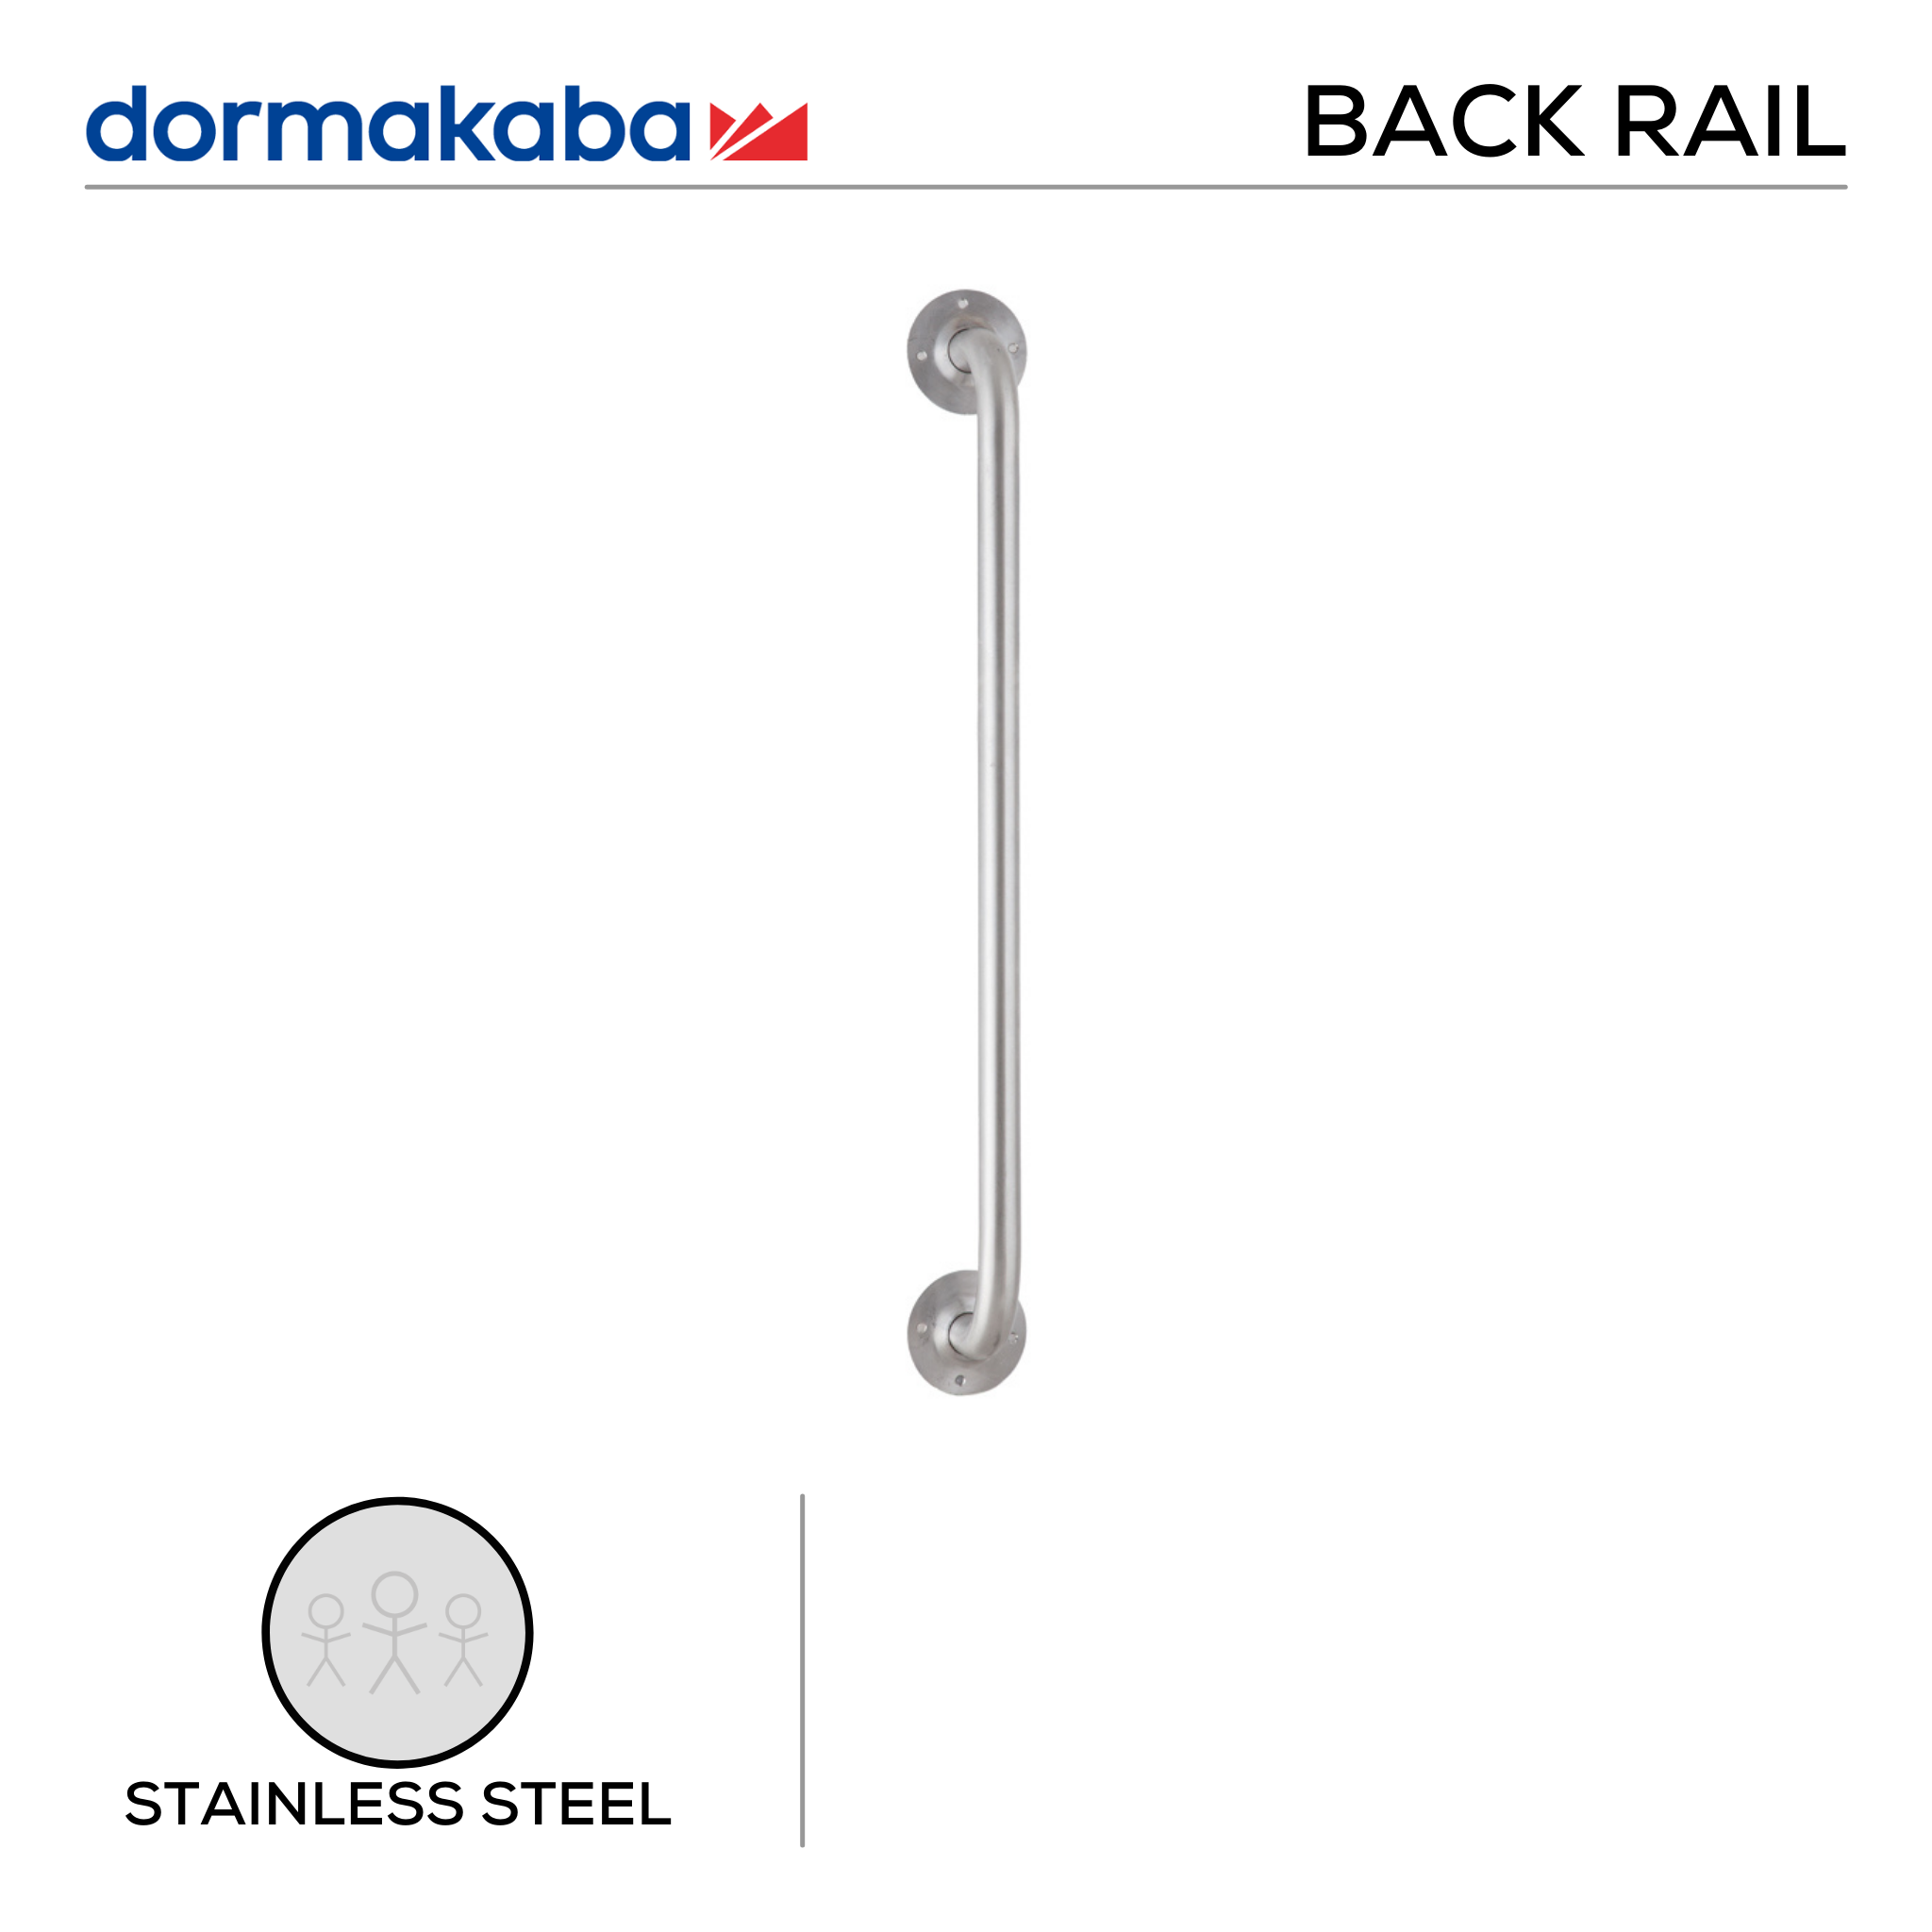 DGR-SS-150, Back Rail, Cistern, 800mm (l) x 206mm (w), Stainless Steel, DORMAKABA